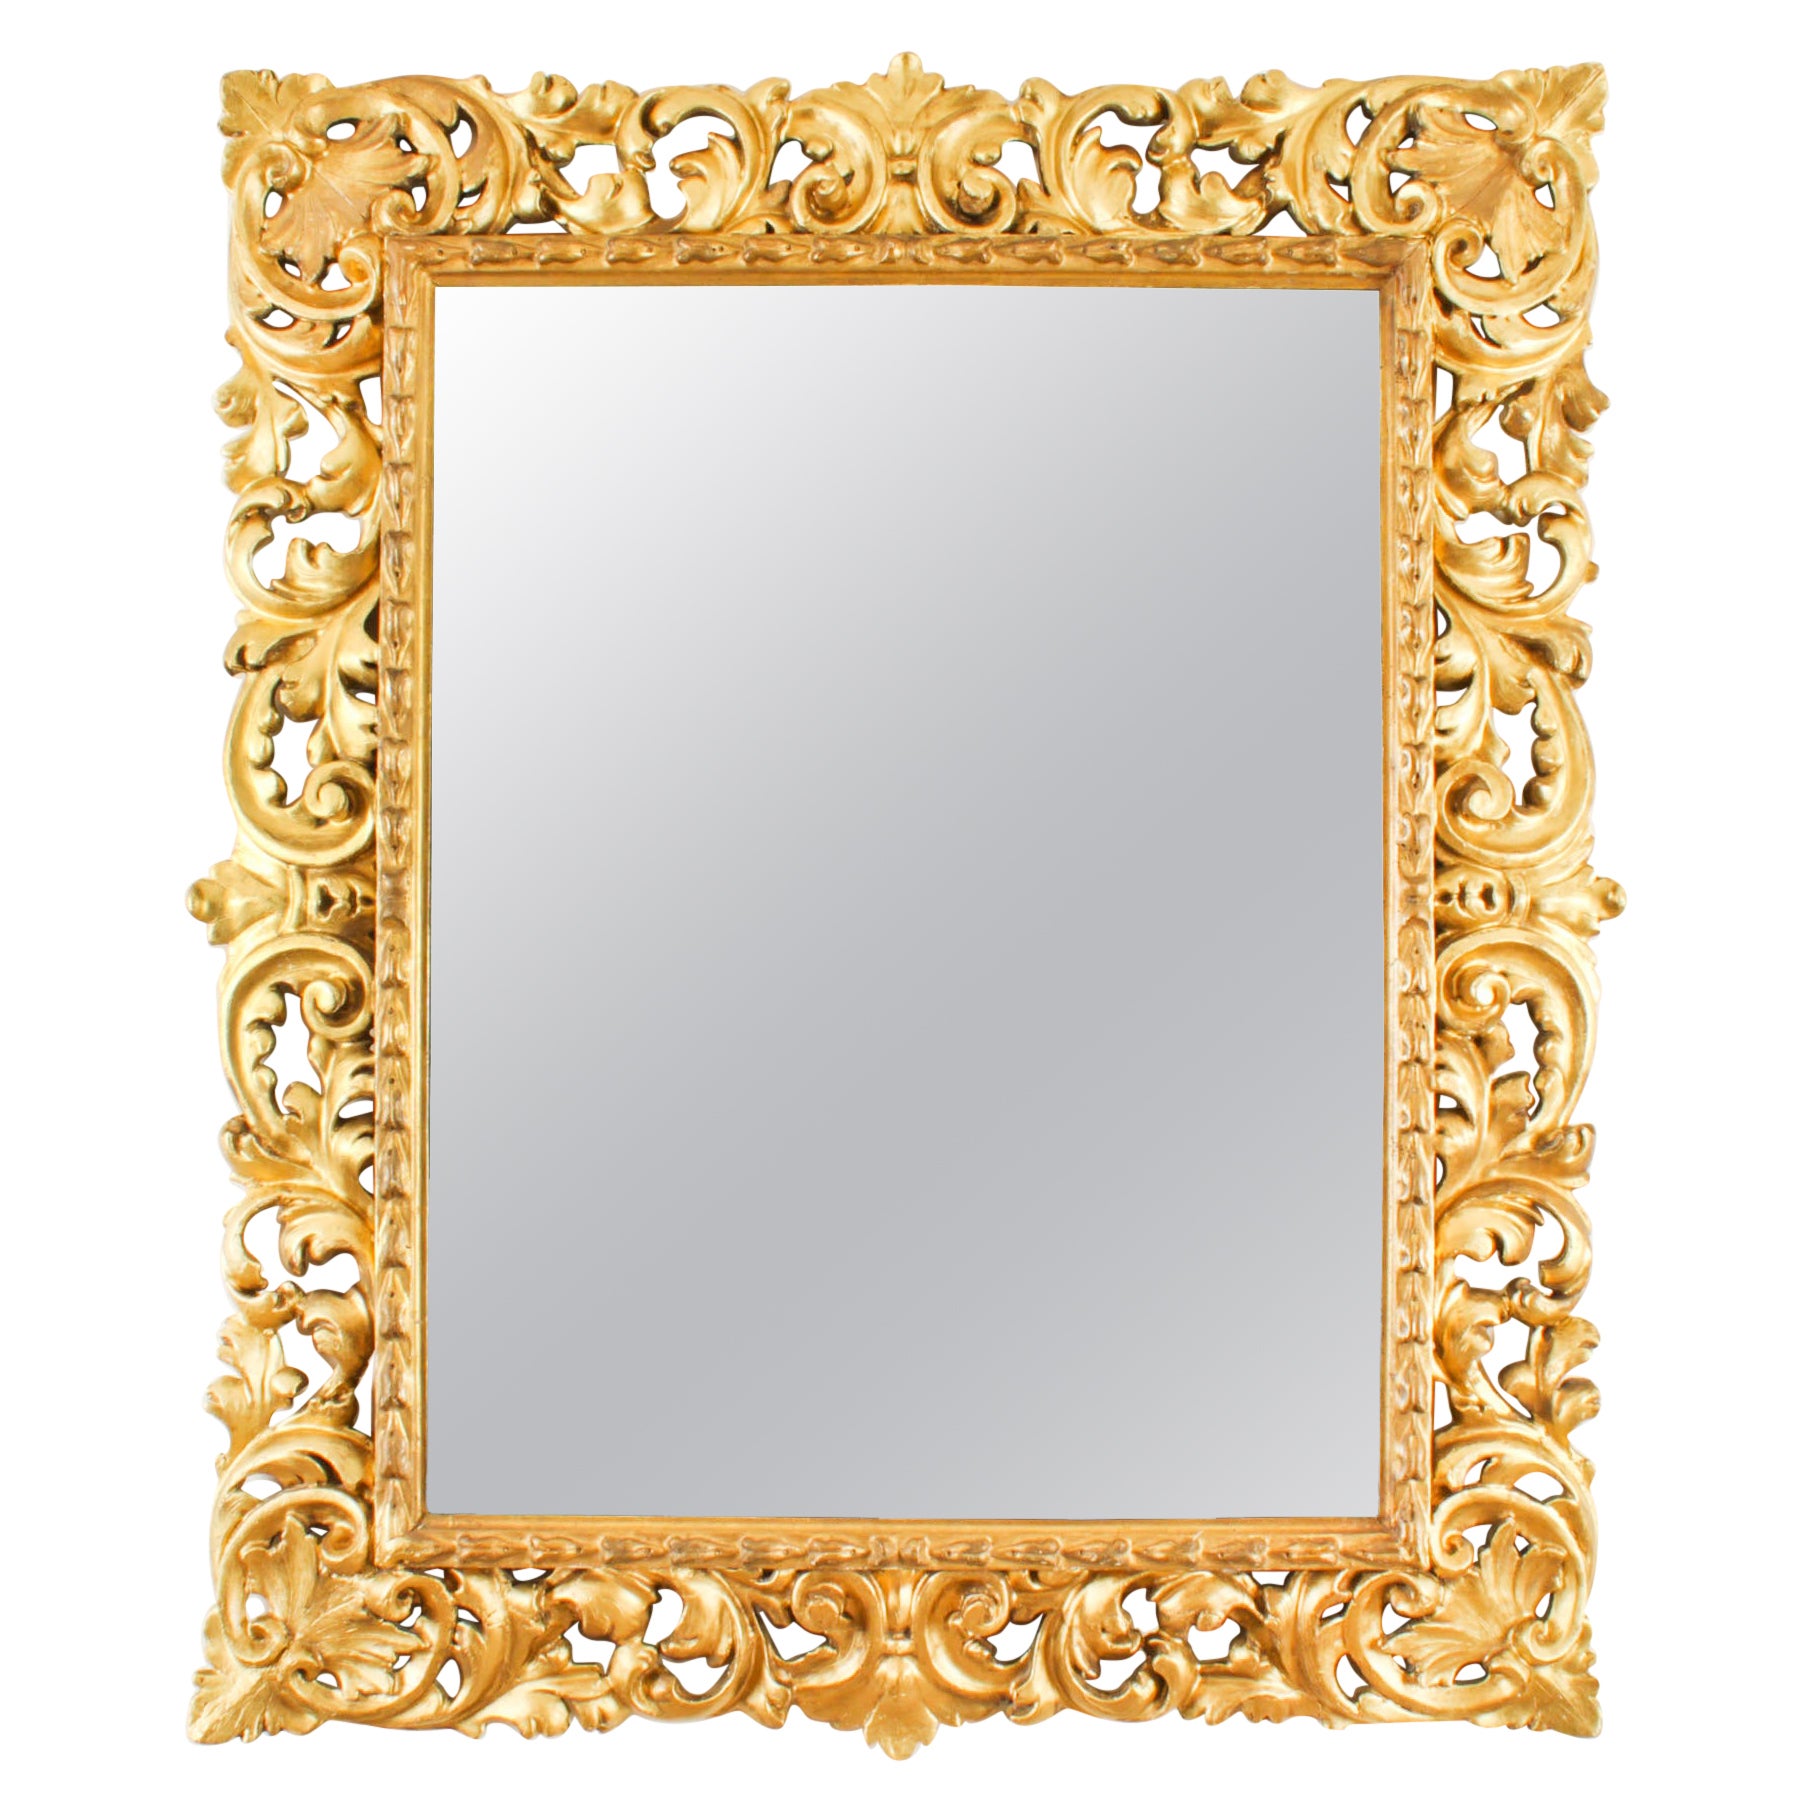 Antique Italian Giltwood Florentine Overmantle Mirror 19th Century